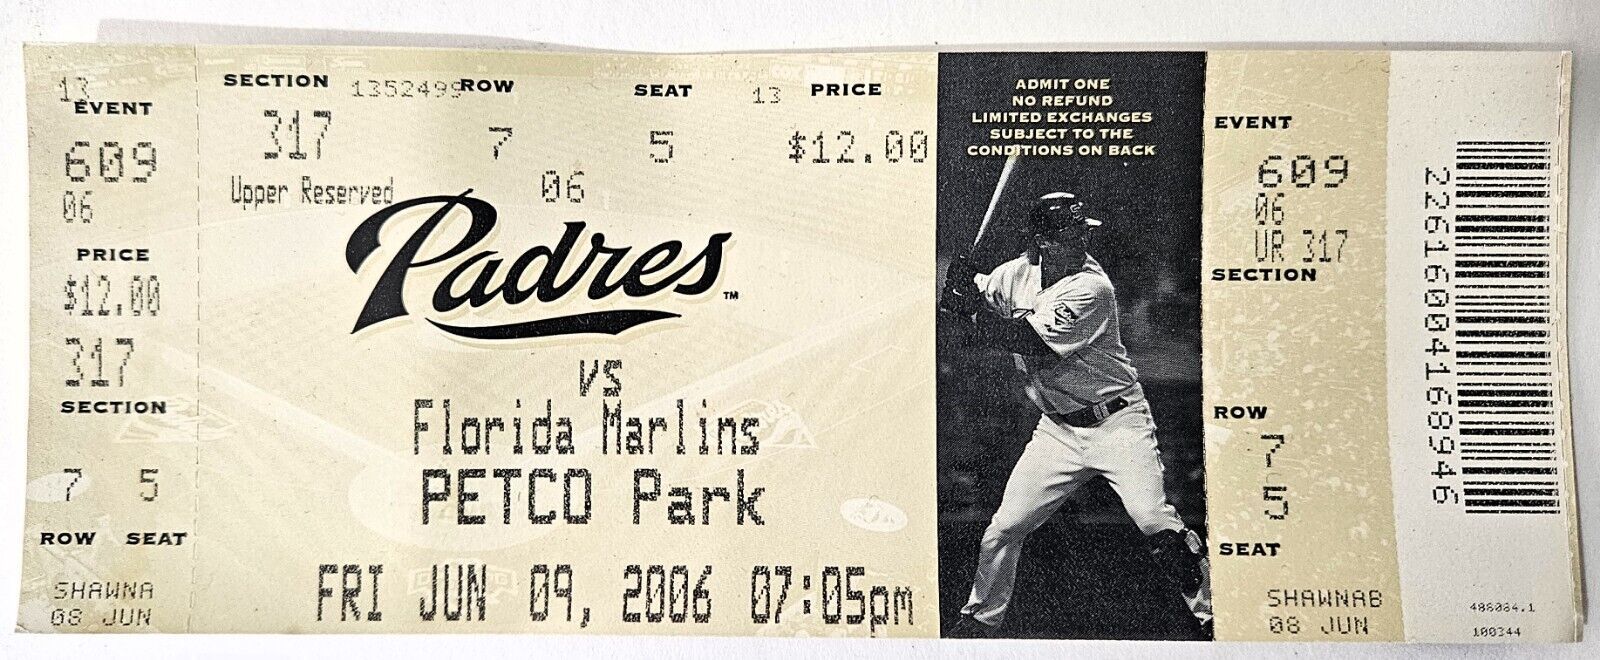 Primary image for San Diego Padres vs Florida Marlins Ticket Stub  June 9, 2006 Petco Park